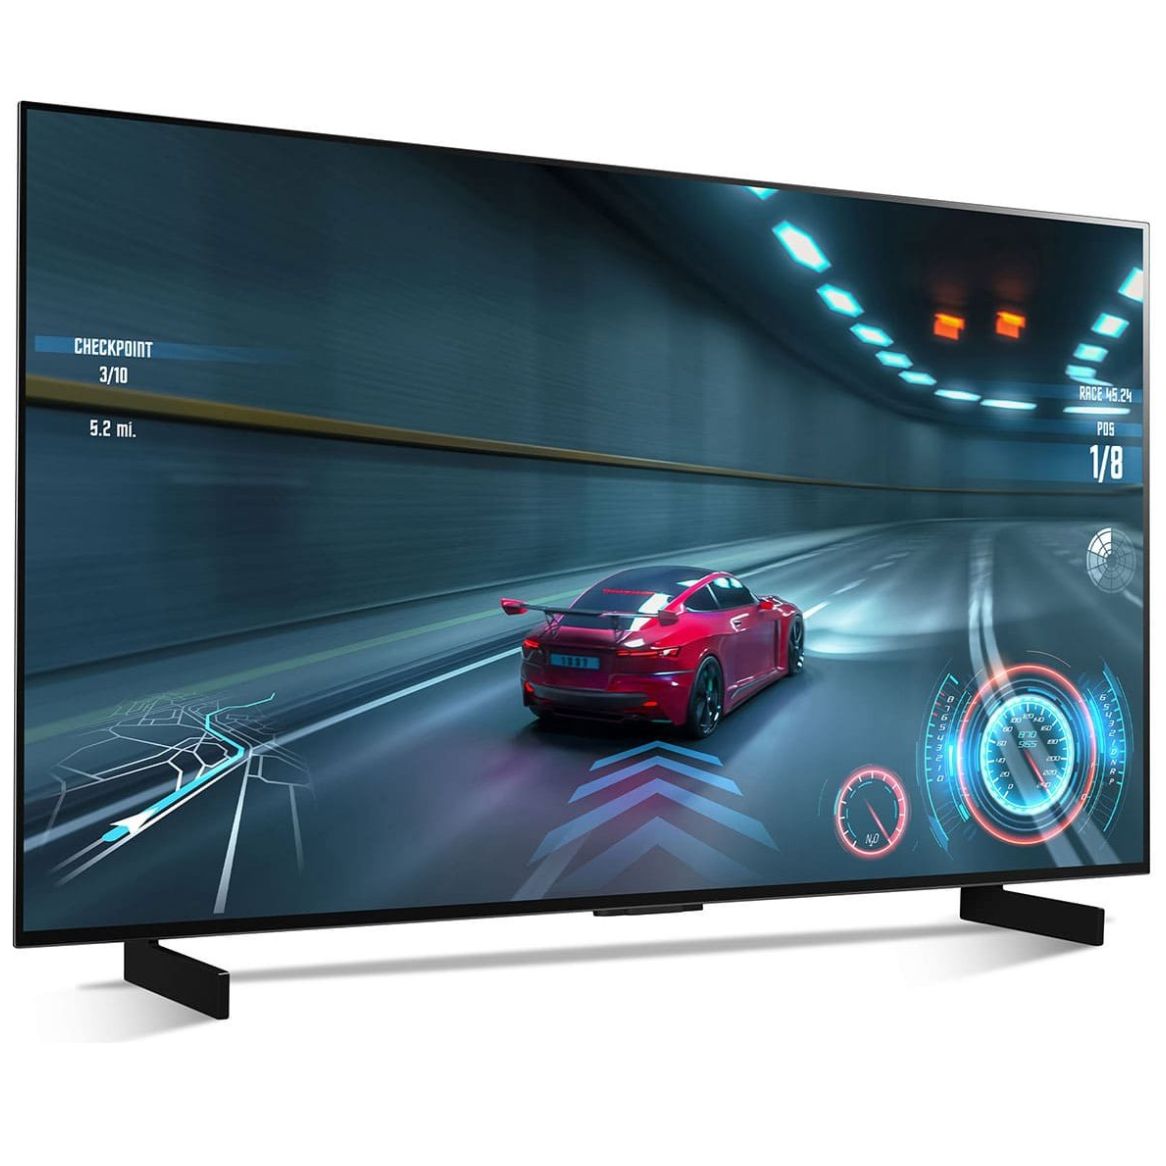 LG Pantalla LG OLED 42'' C3 4K SMART TV con ThinQ AI